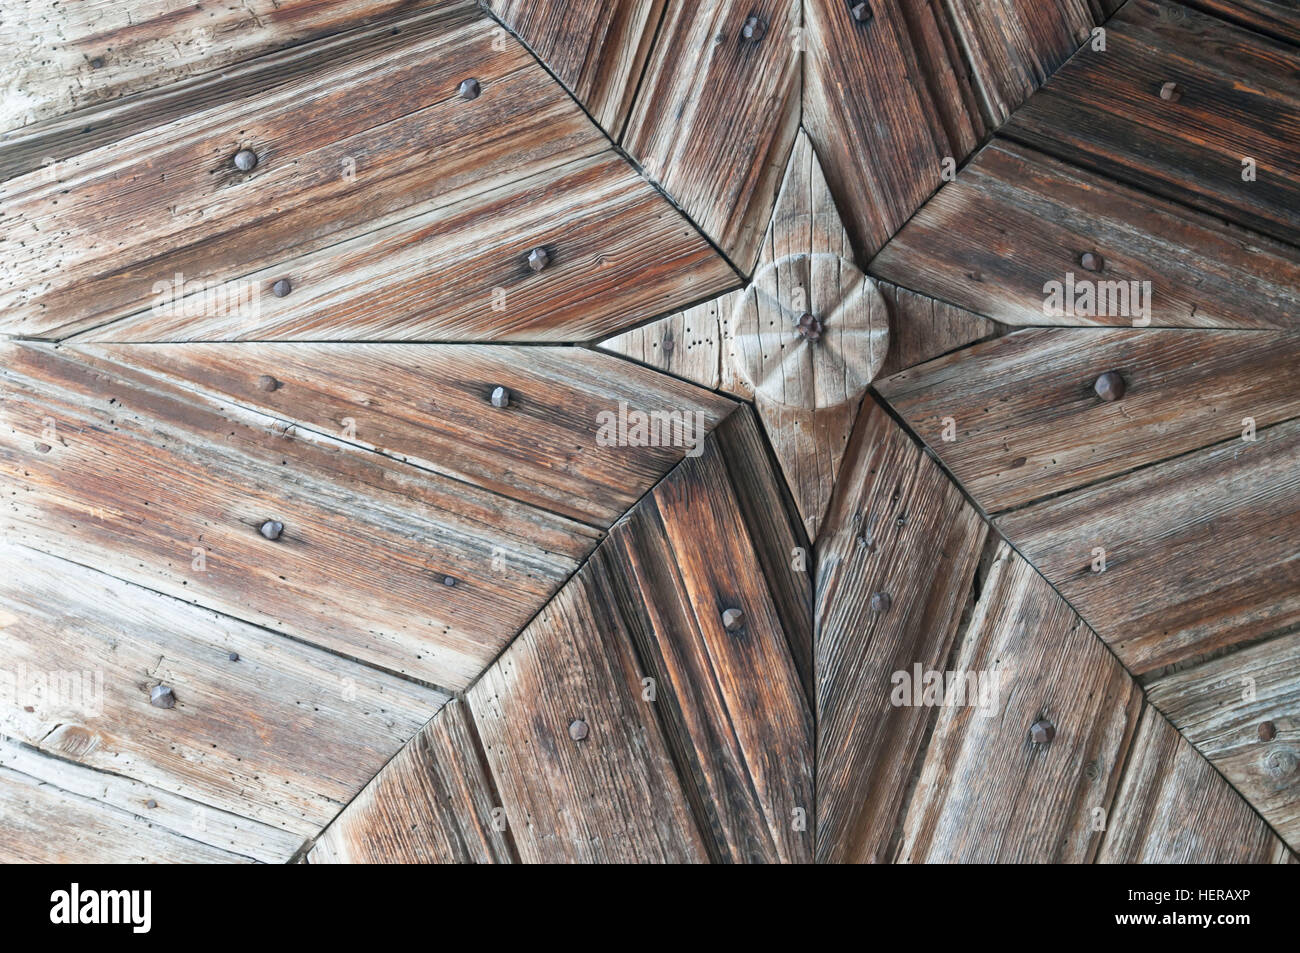 wooden door with star pattern Stock Photo